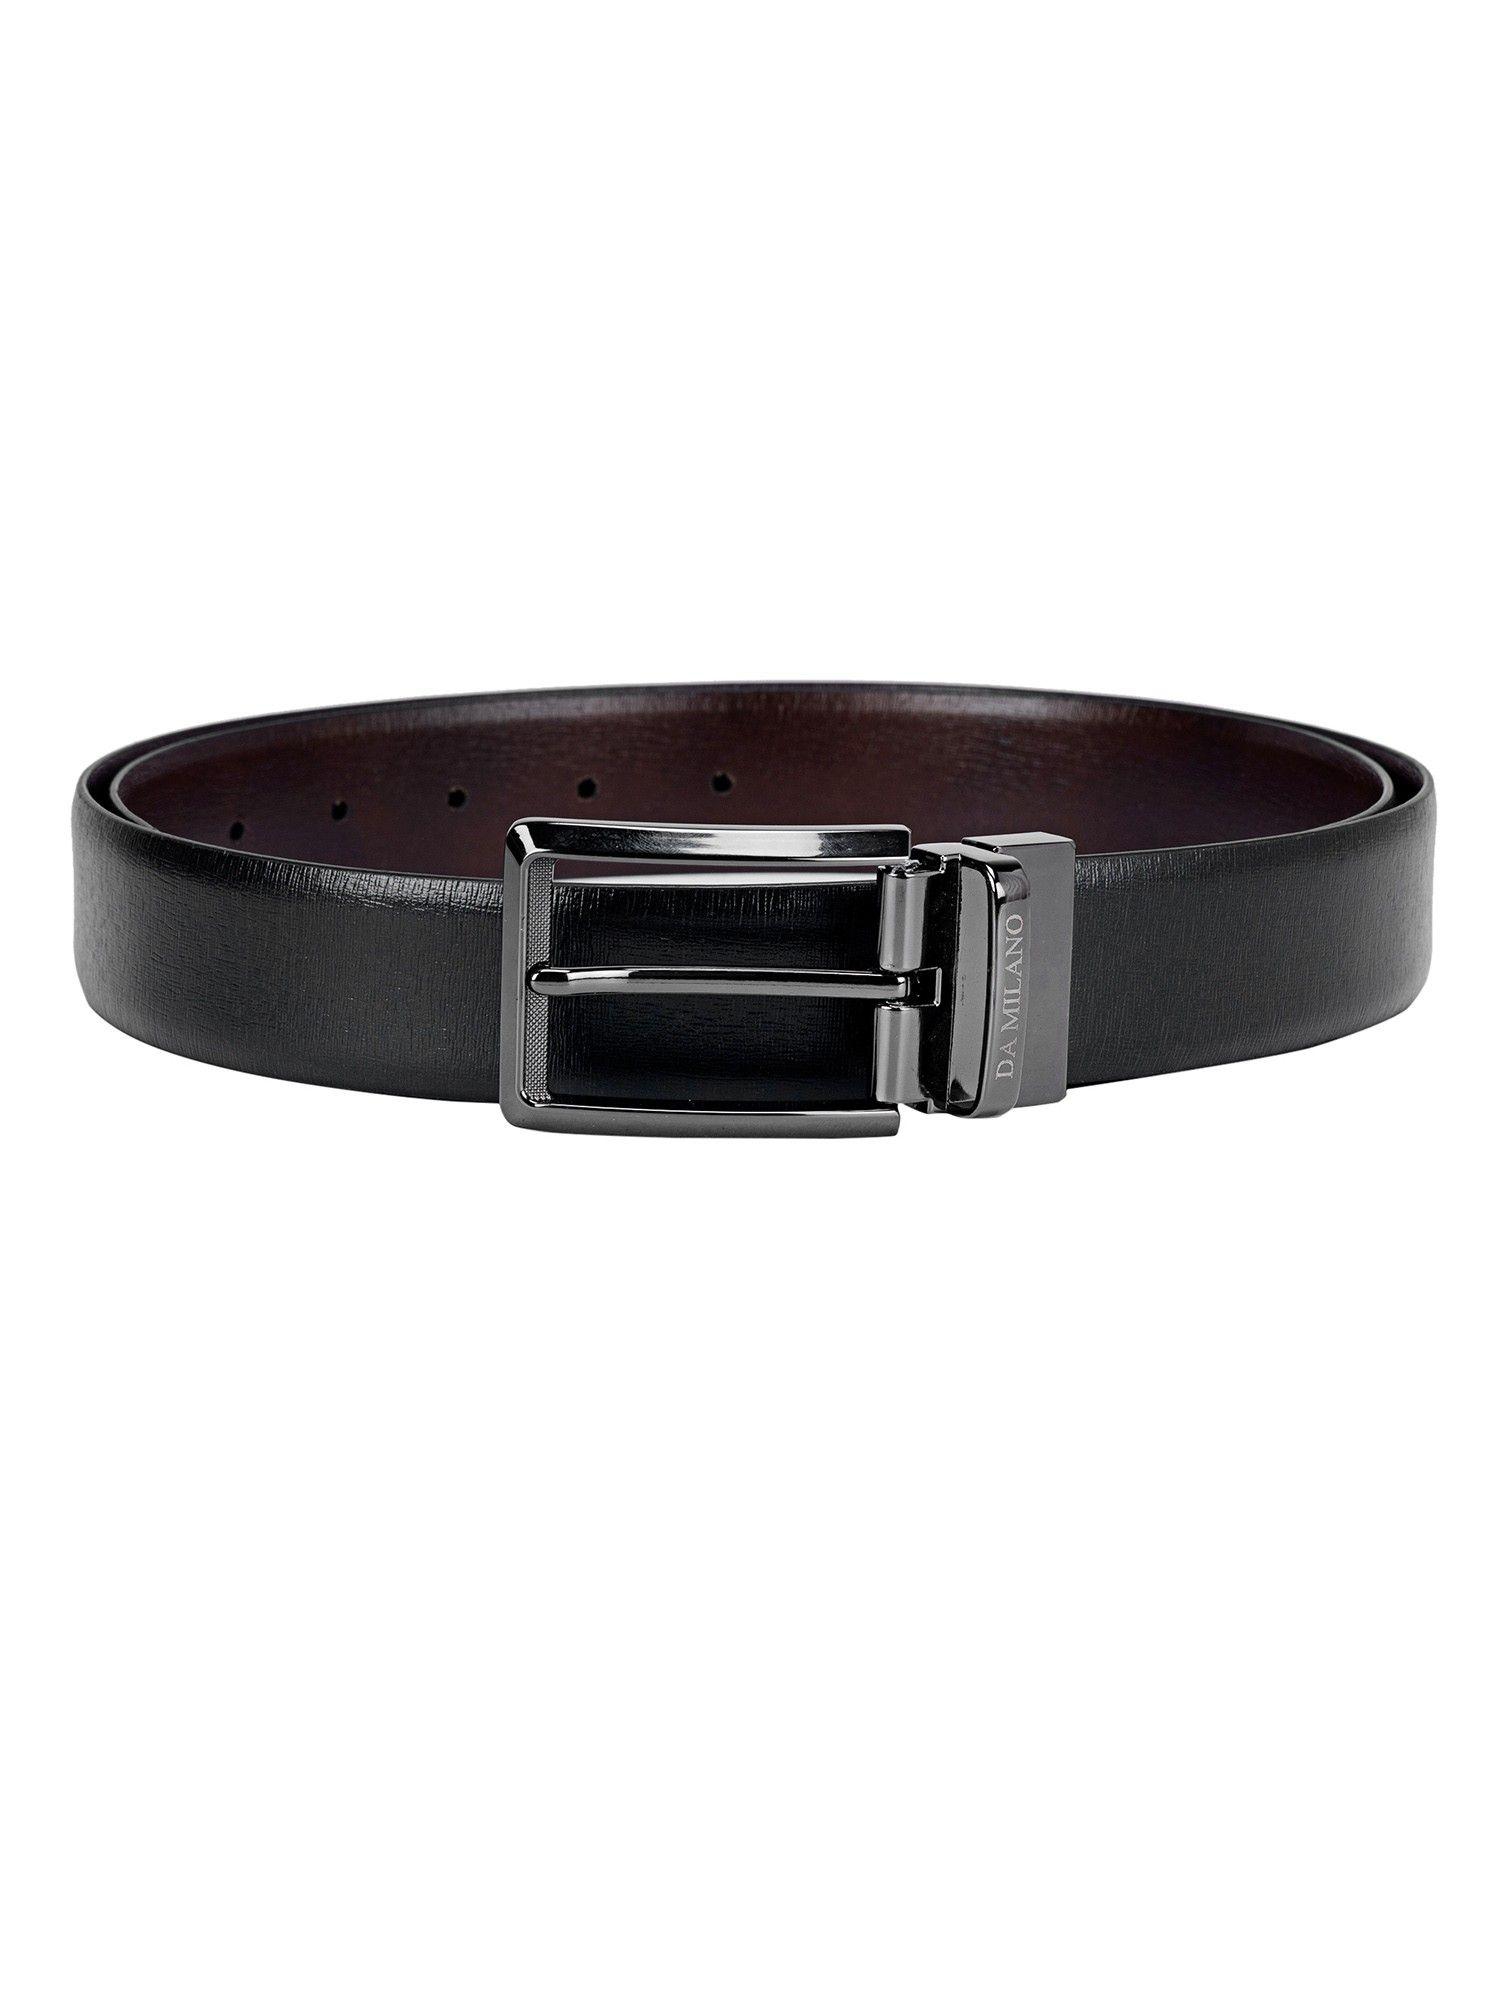 leather black & brown reversible belt bm-3287-35r-olaztec